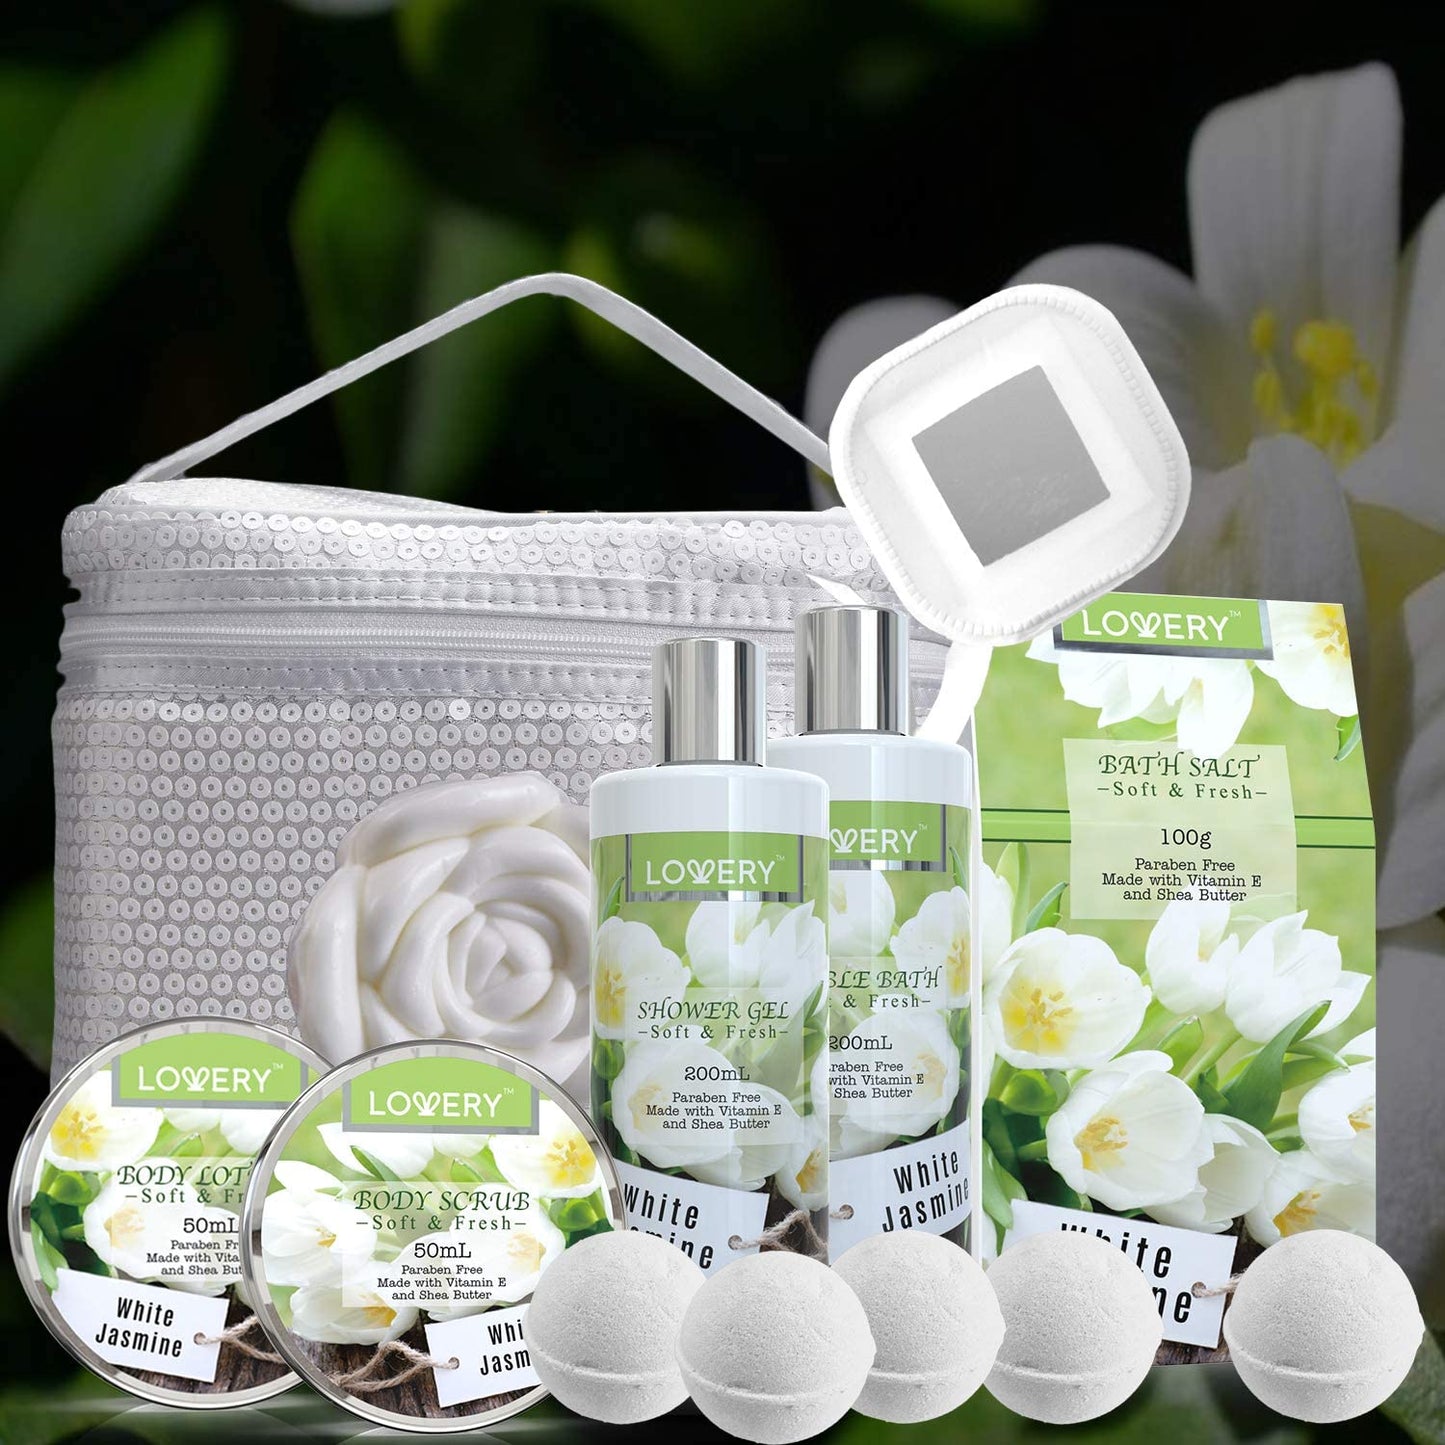 White Jasmine Bath Set - 13Pc Sequin Cosmetic Bag Kit